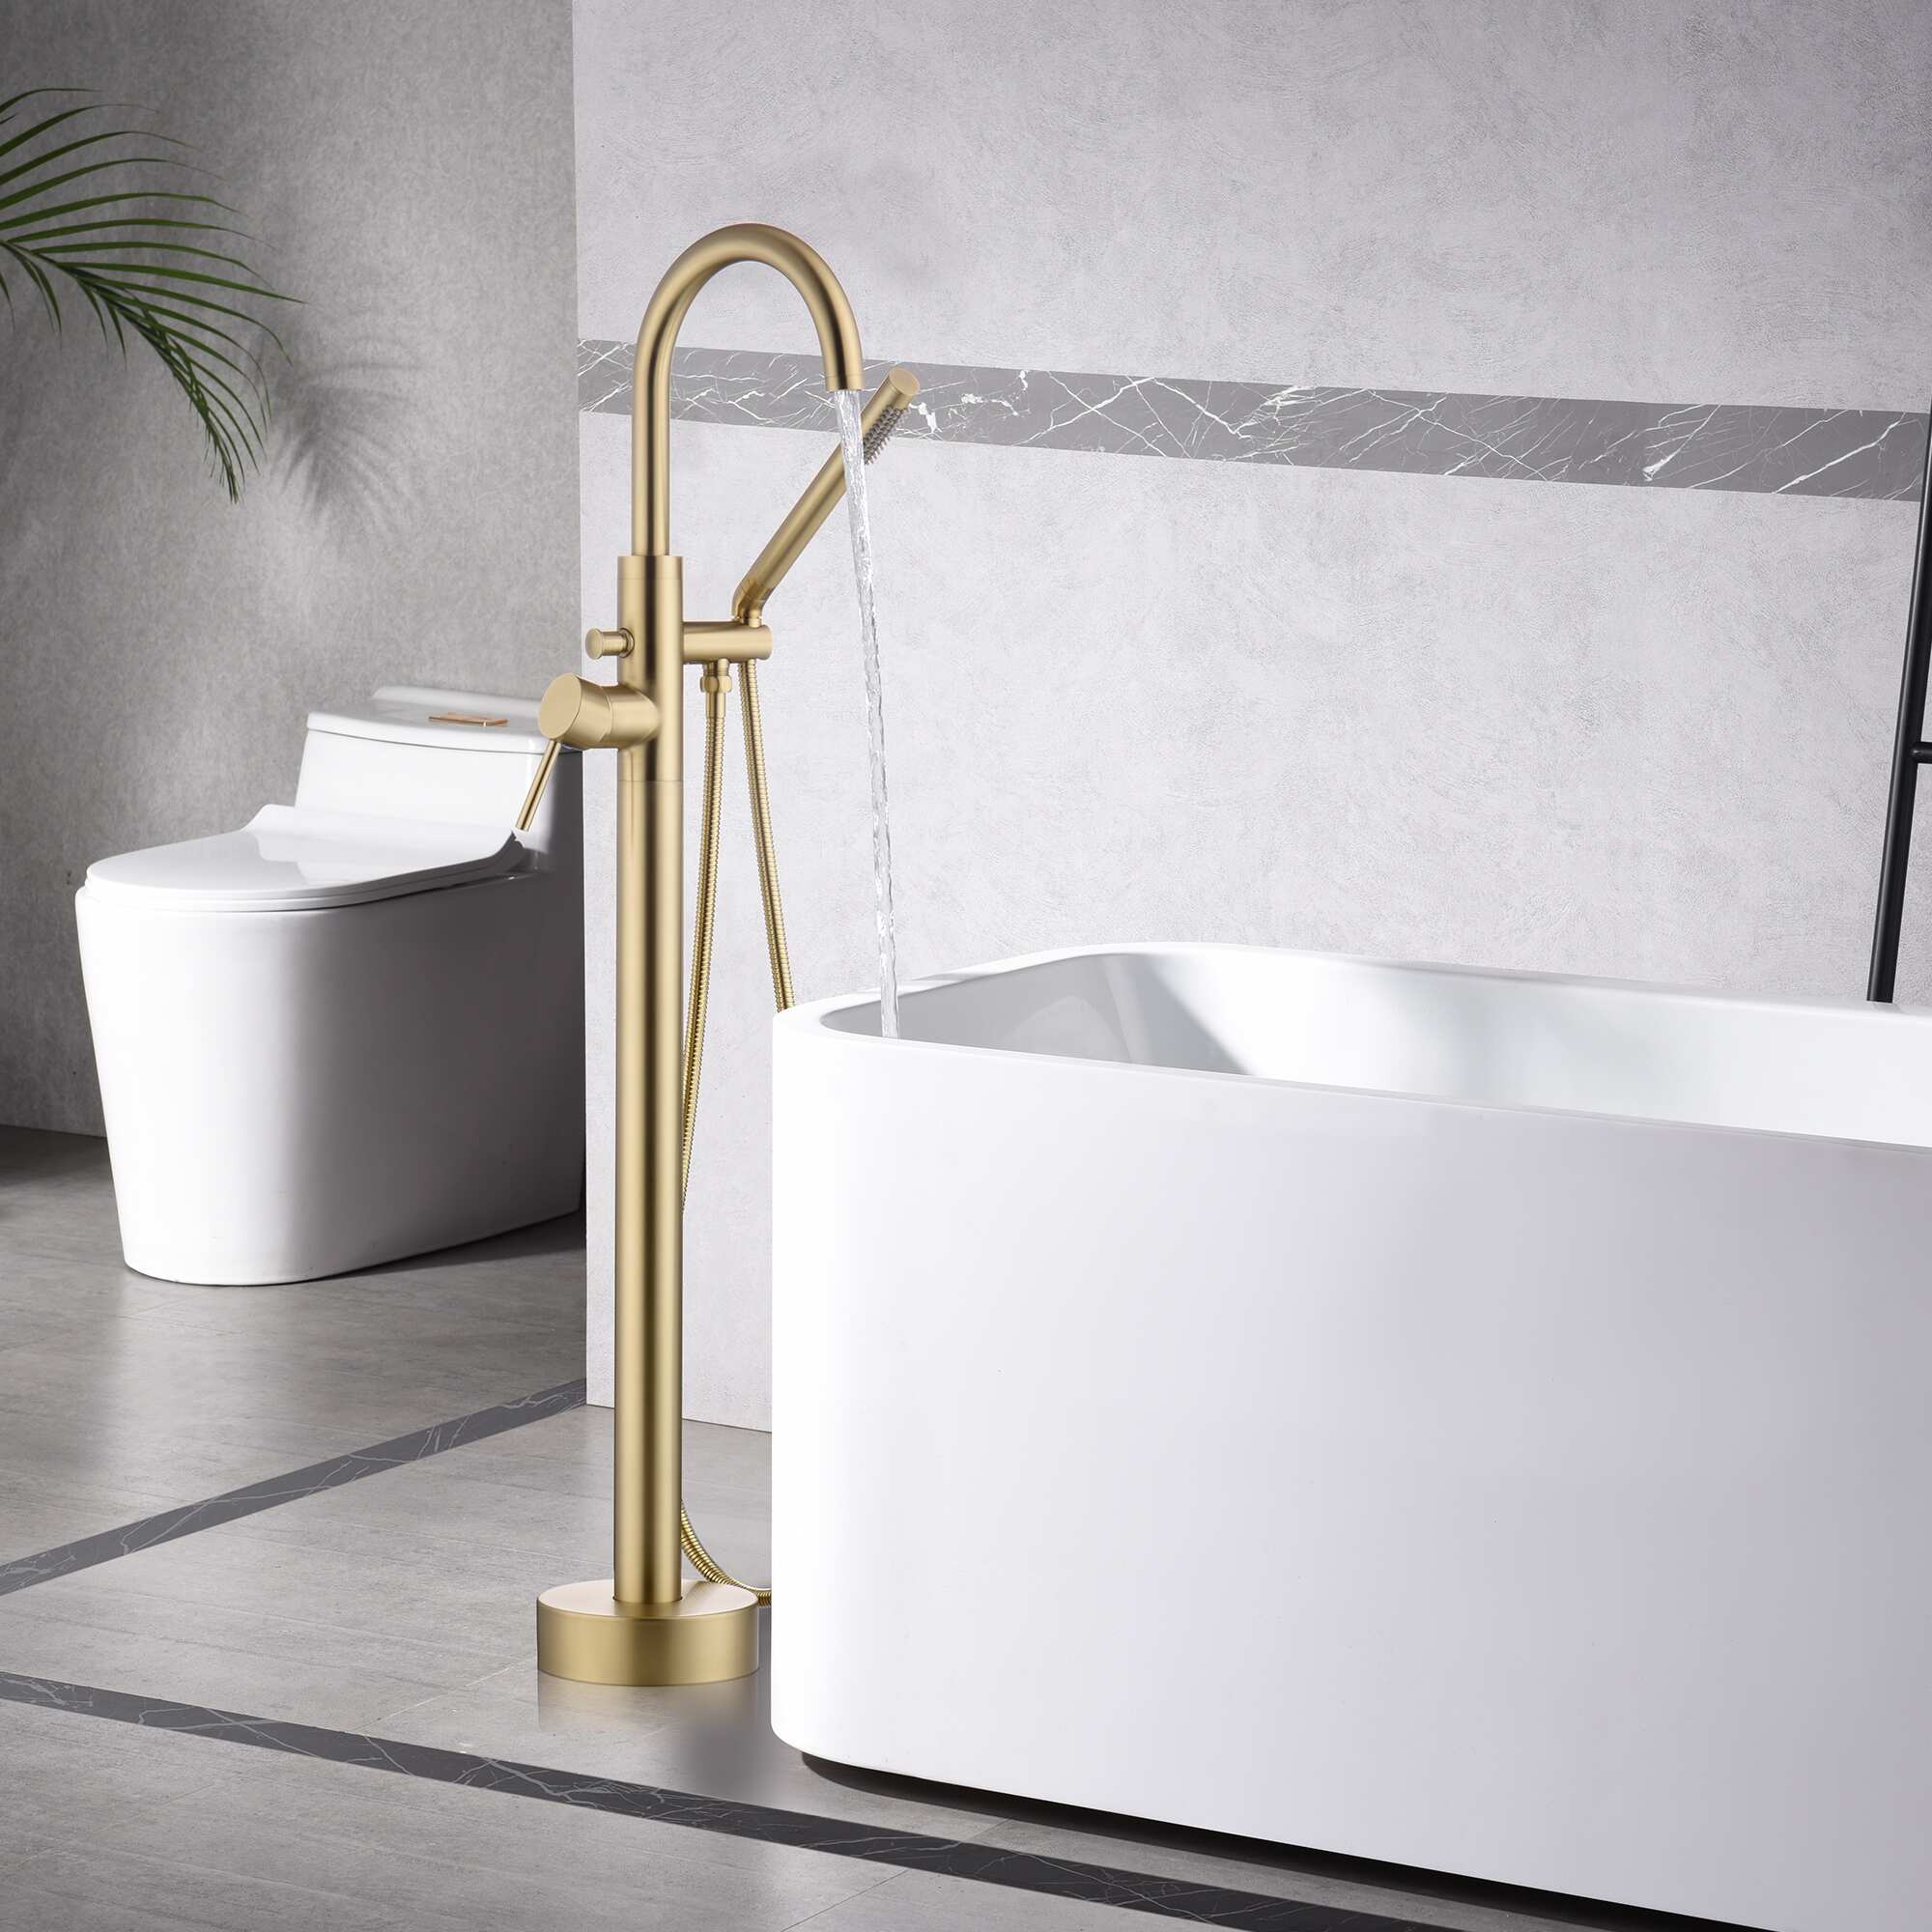 sumerain Freestanding Tub Faucet Floor Mounted Bathtub Faucet with Handheld Shower